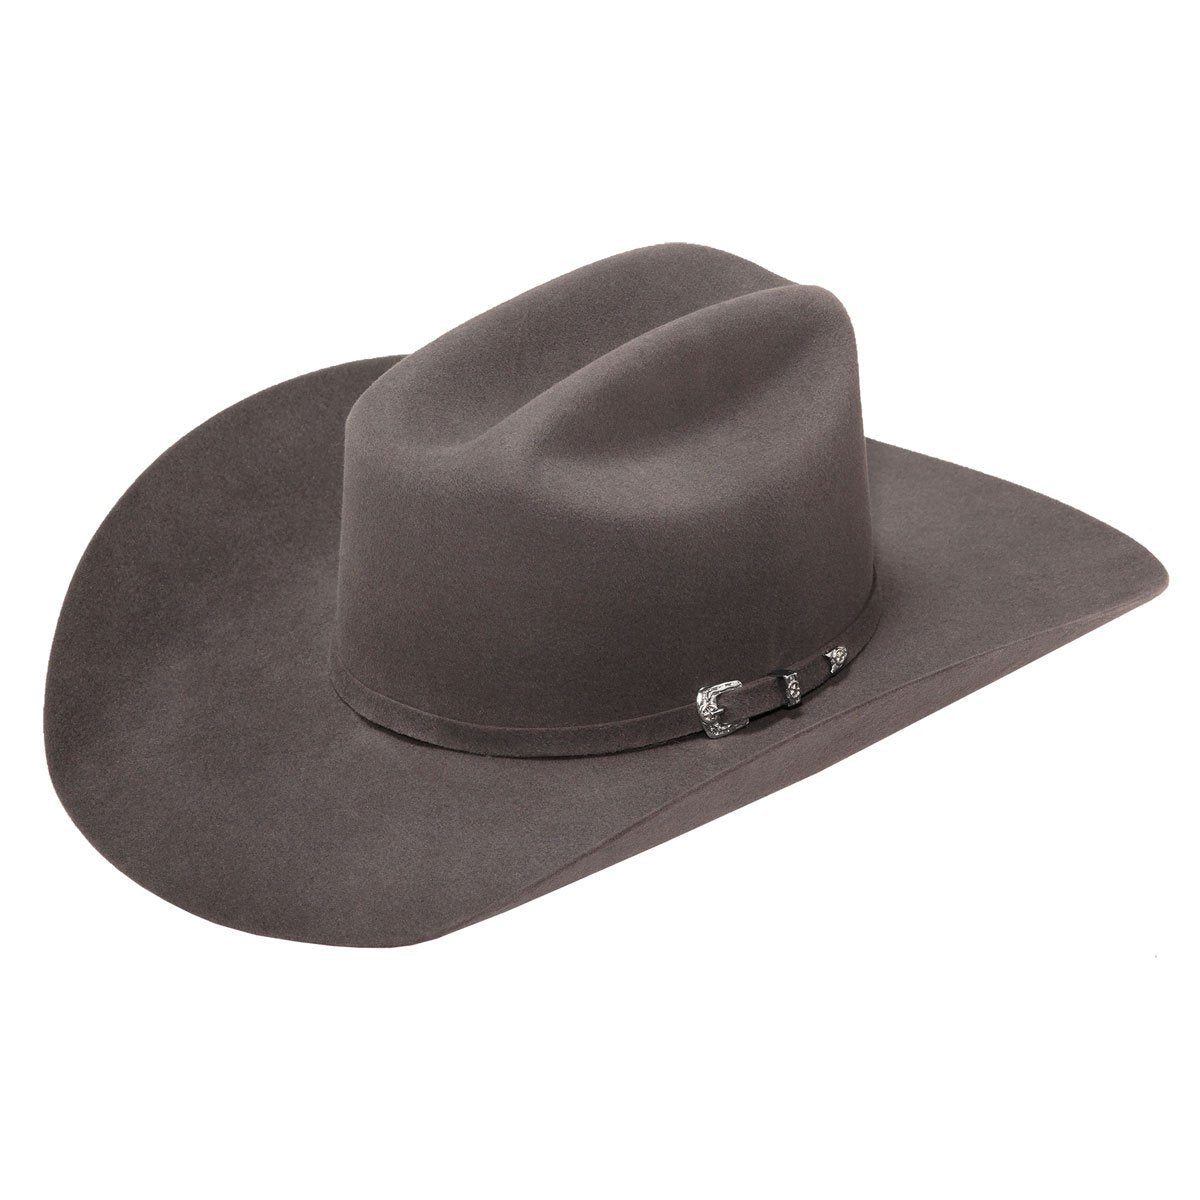 A75112286 Ariat 10X Fur STEEL Double S Hat